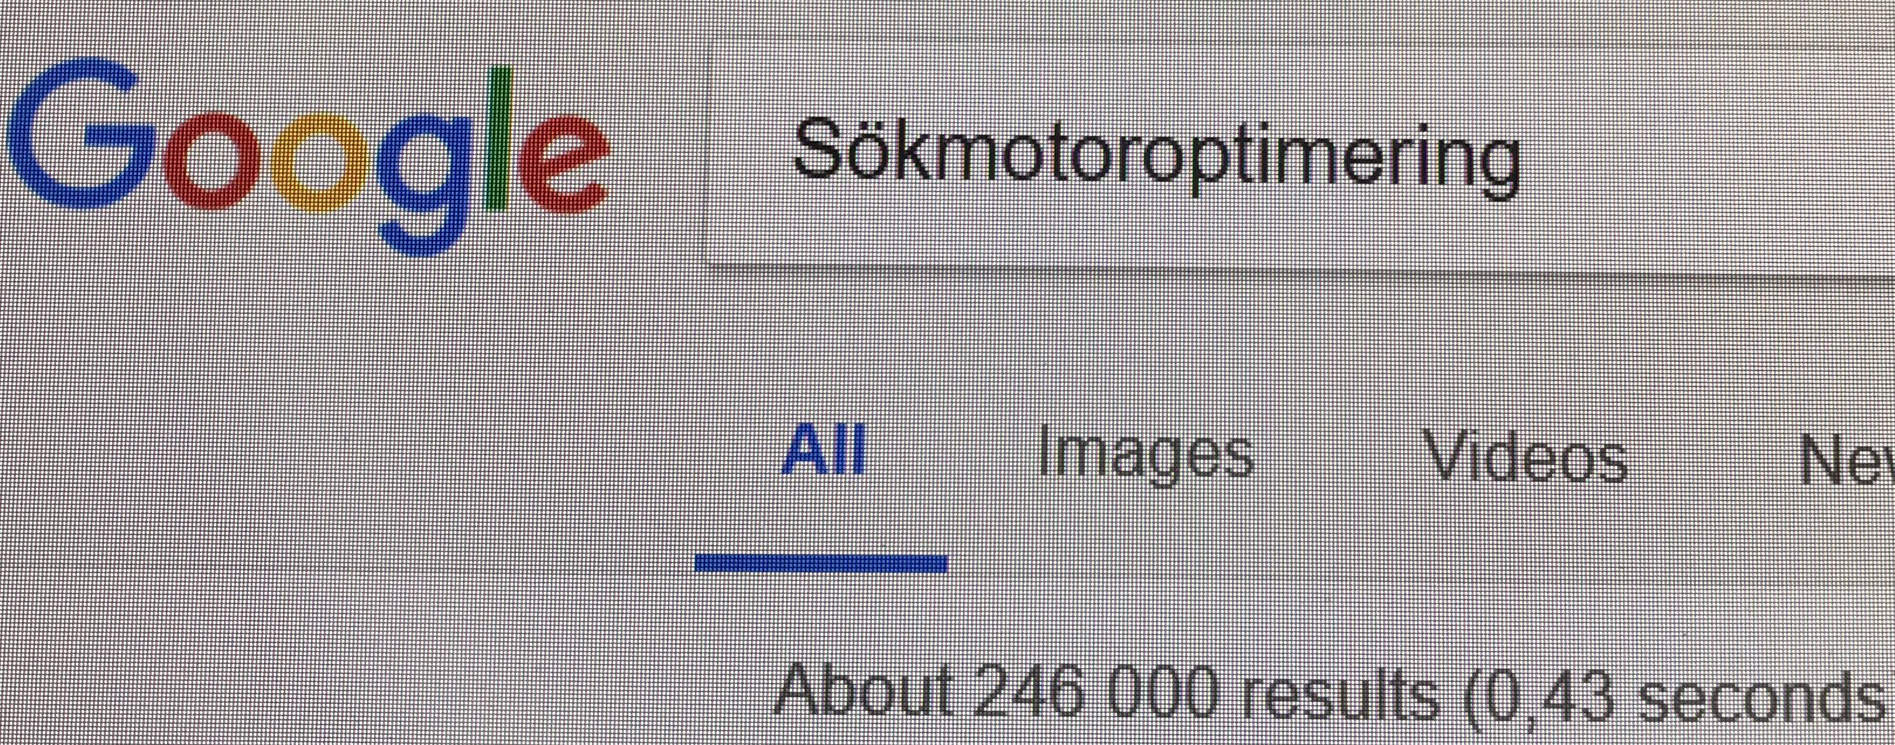 top-image-rankning-google